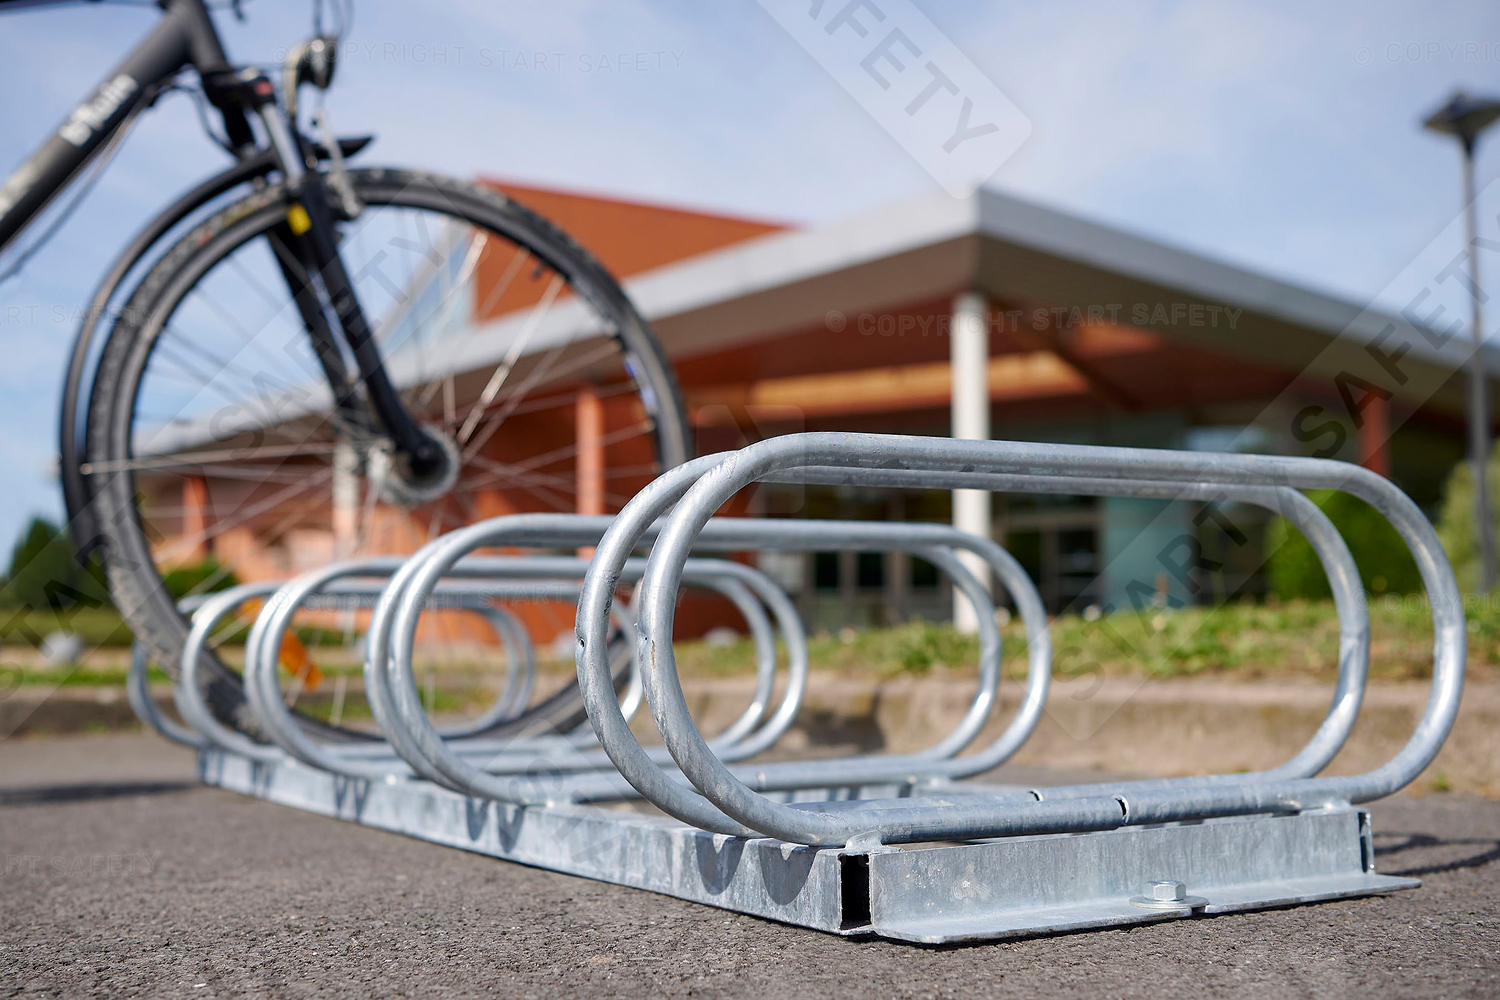 Economy Bike Rack With Bikes Parked Closeup